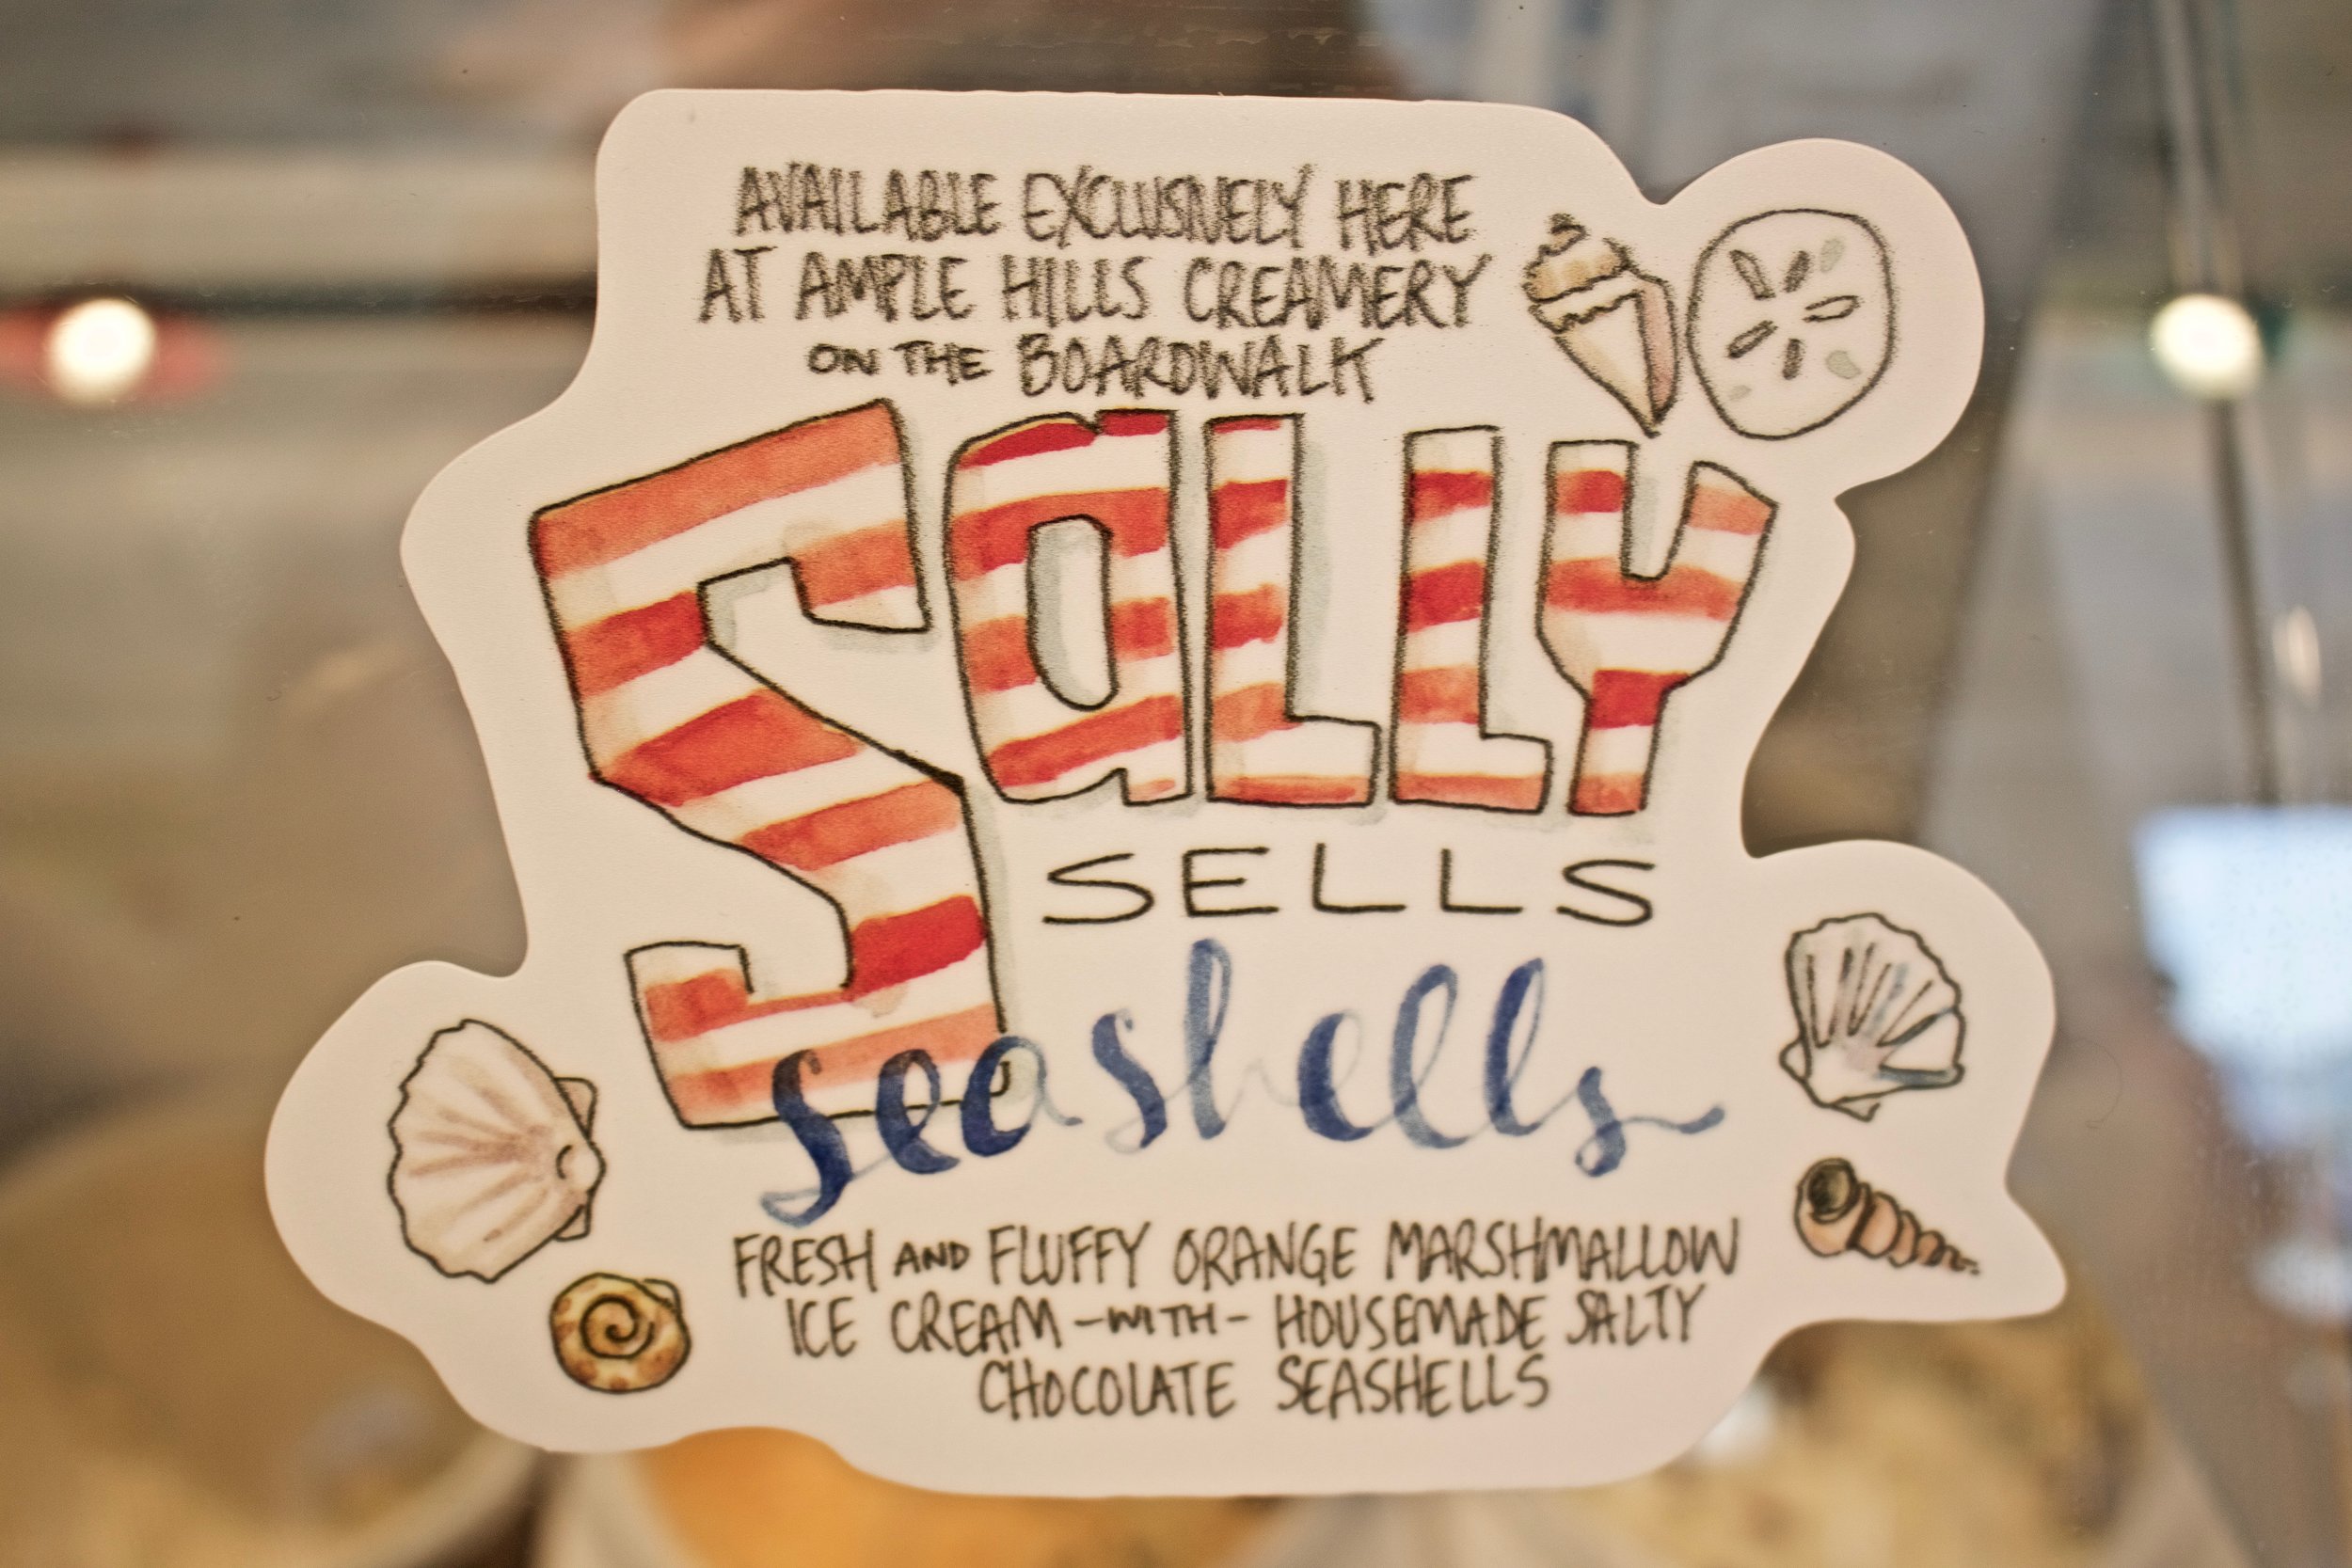 Sally+Sells+Seashells+ice+cream